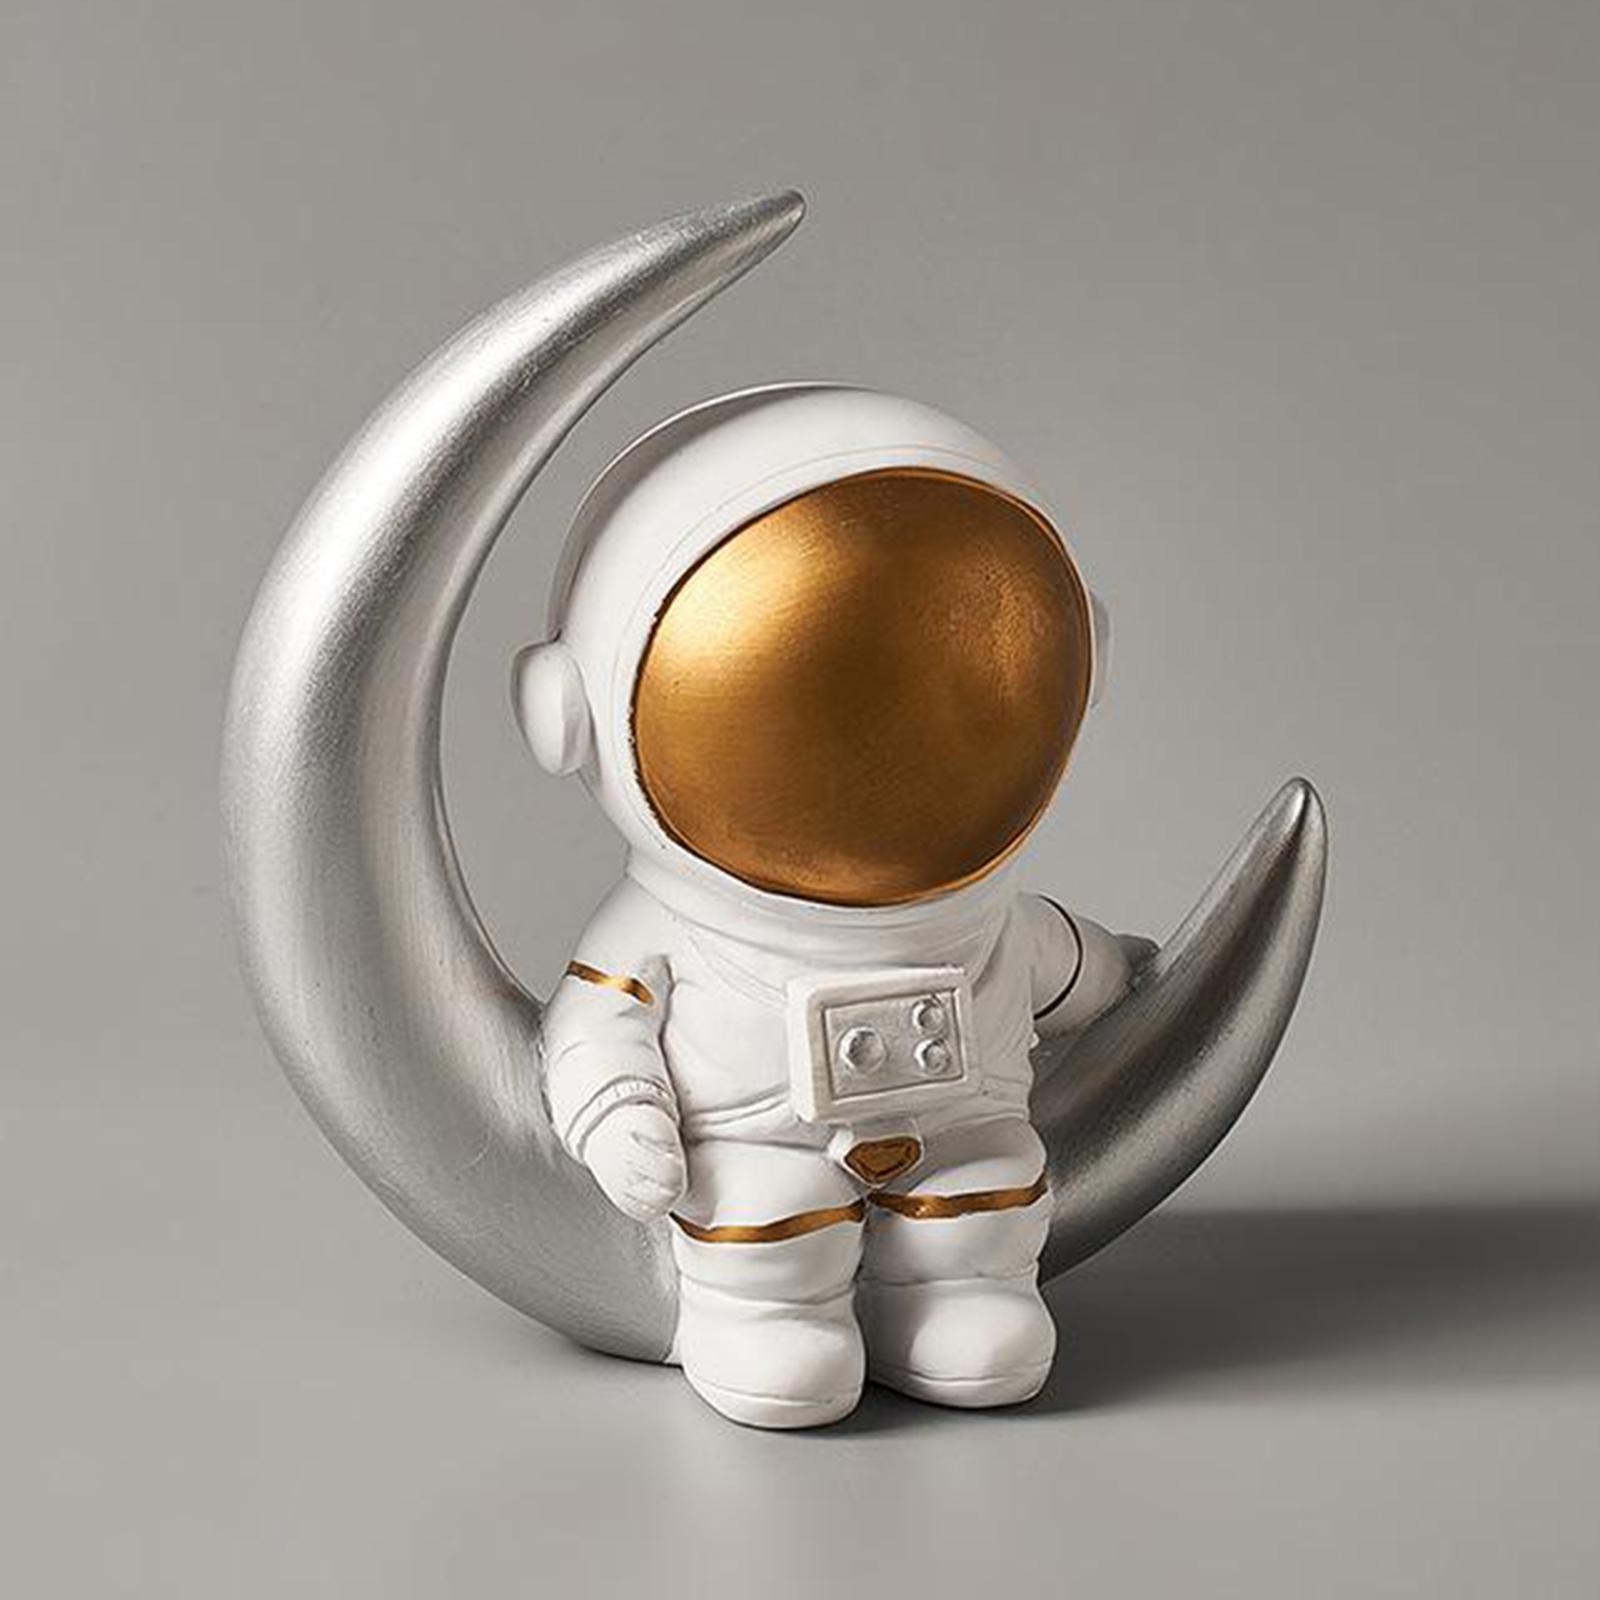 Astronaut Statues Sculpture Figurine Ornament Home Art Crafts Desktop Tabletop Decoration Home Office Decor